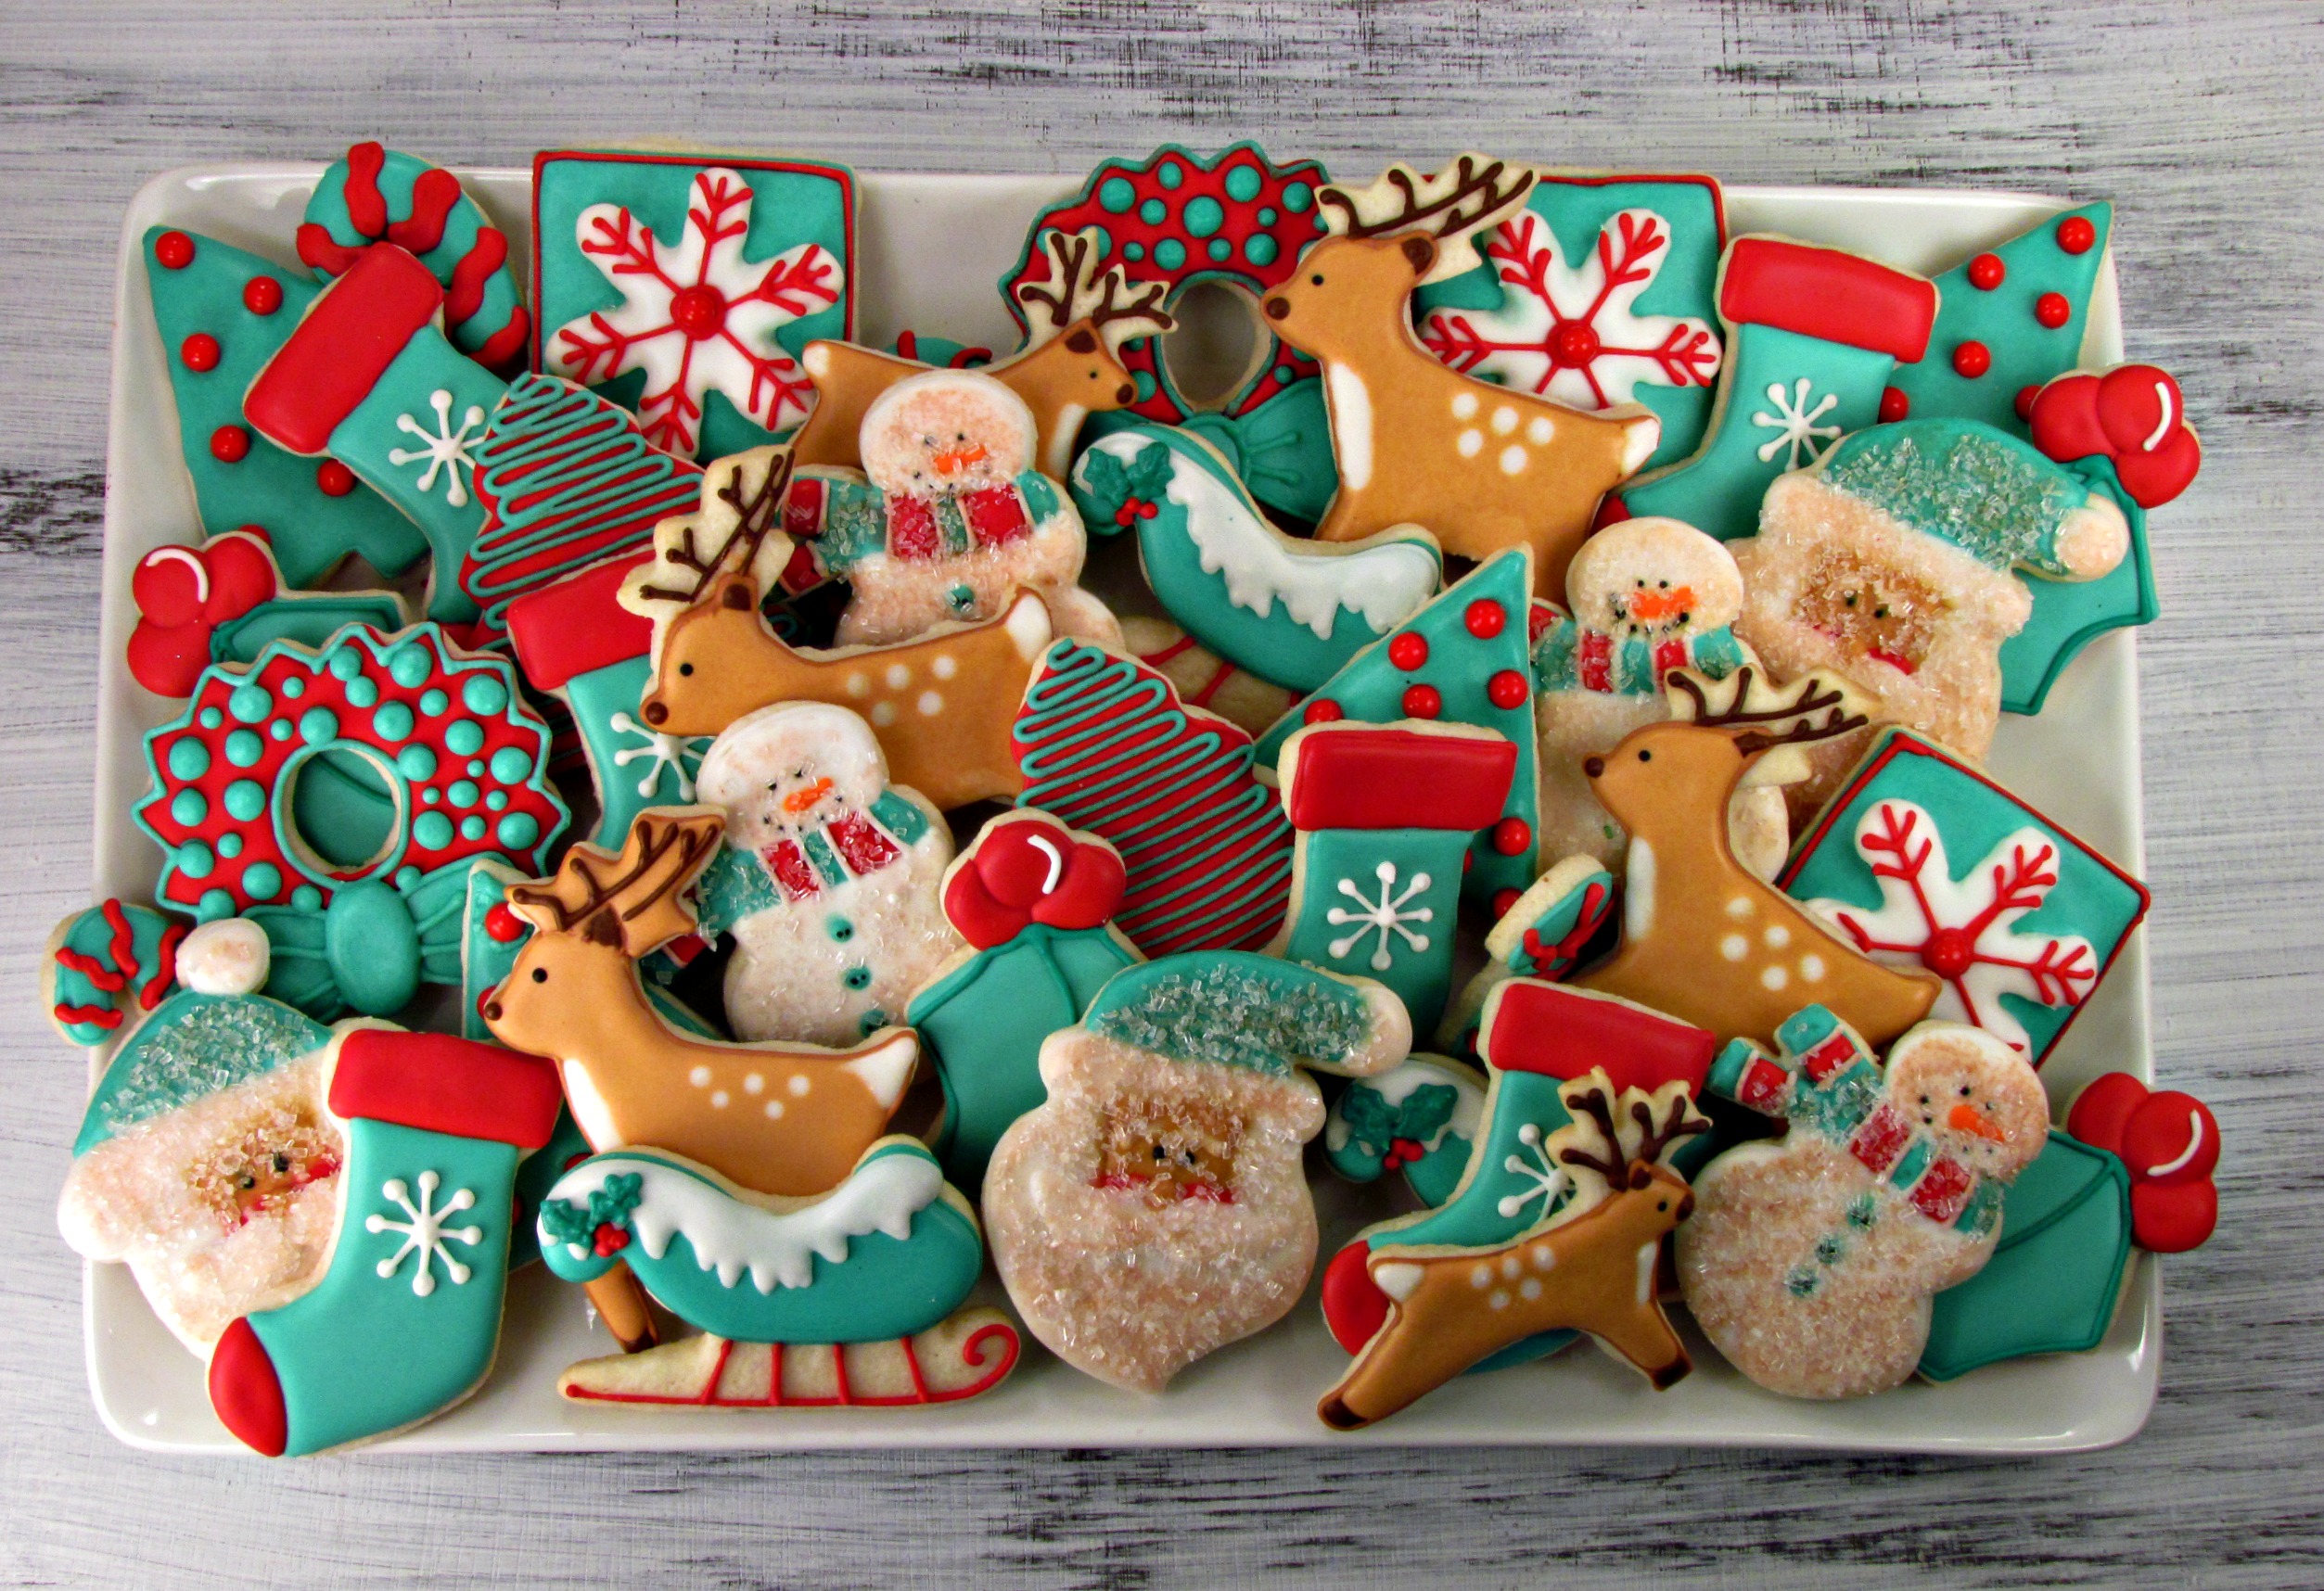 Simple Christmas CookiesMy Holiday Helpers! The Bearfoot Baker